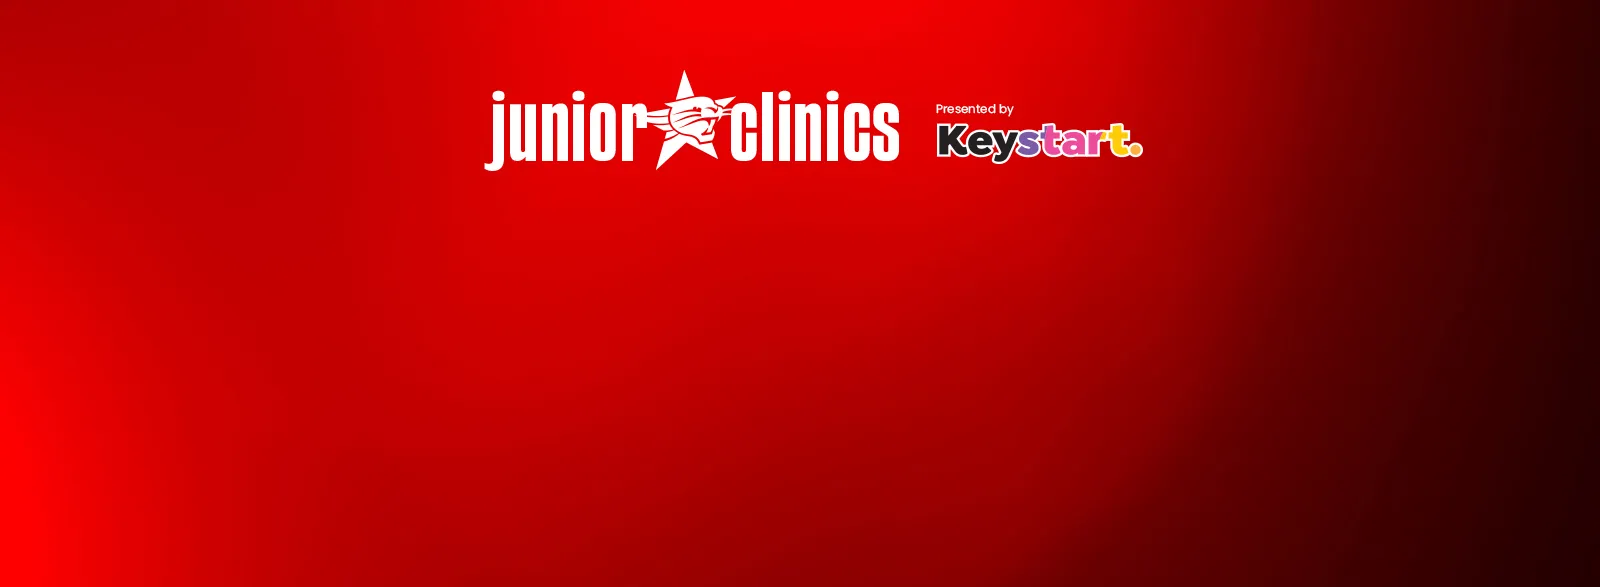 Junior Clinics